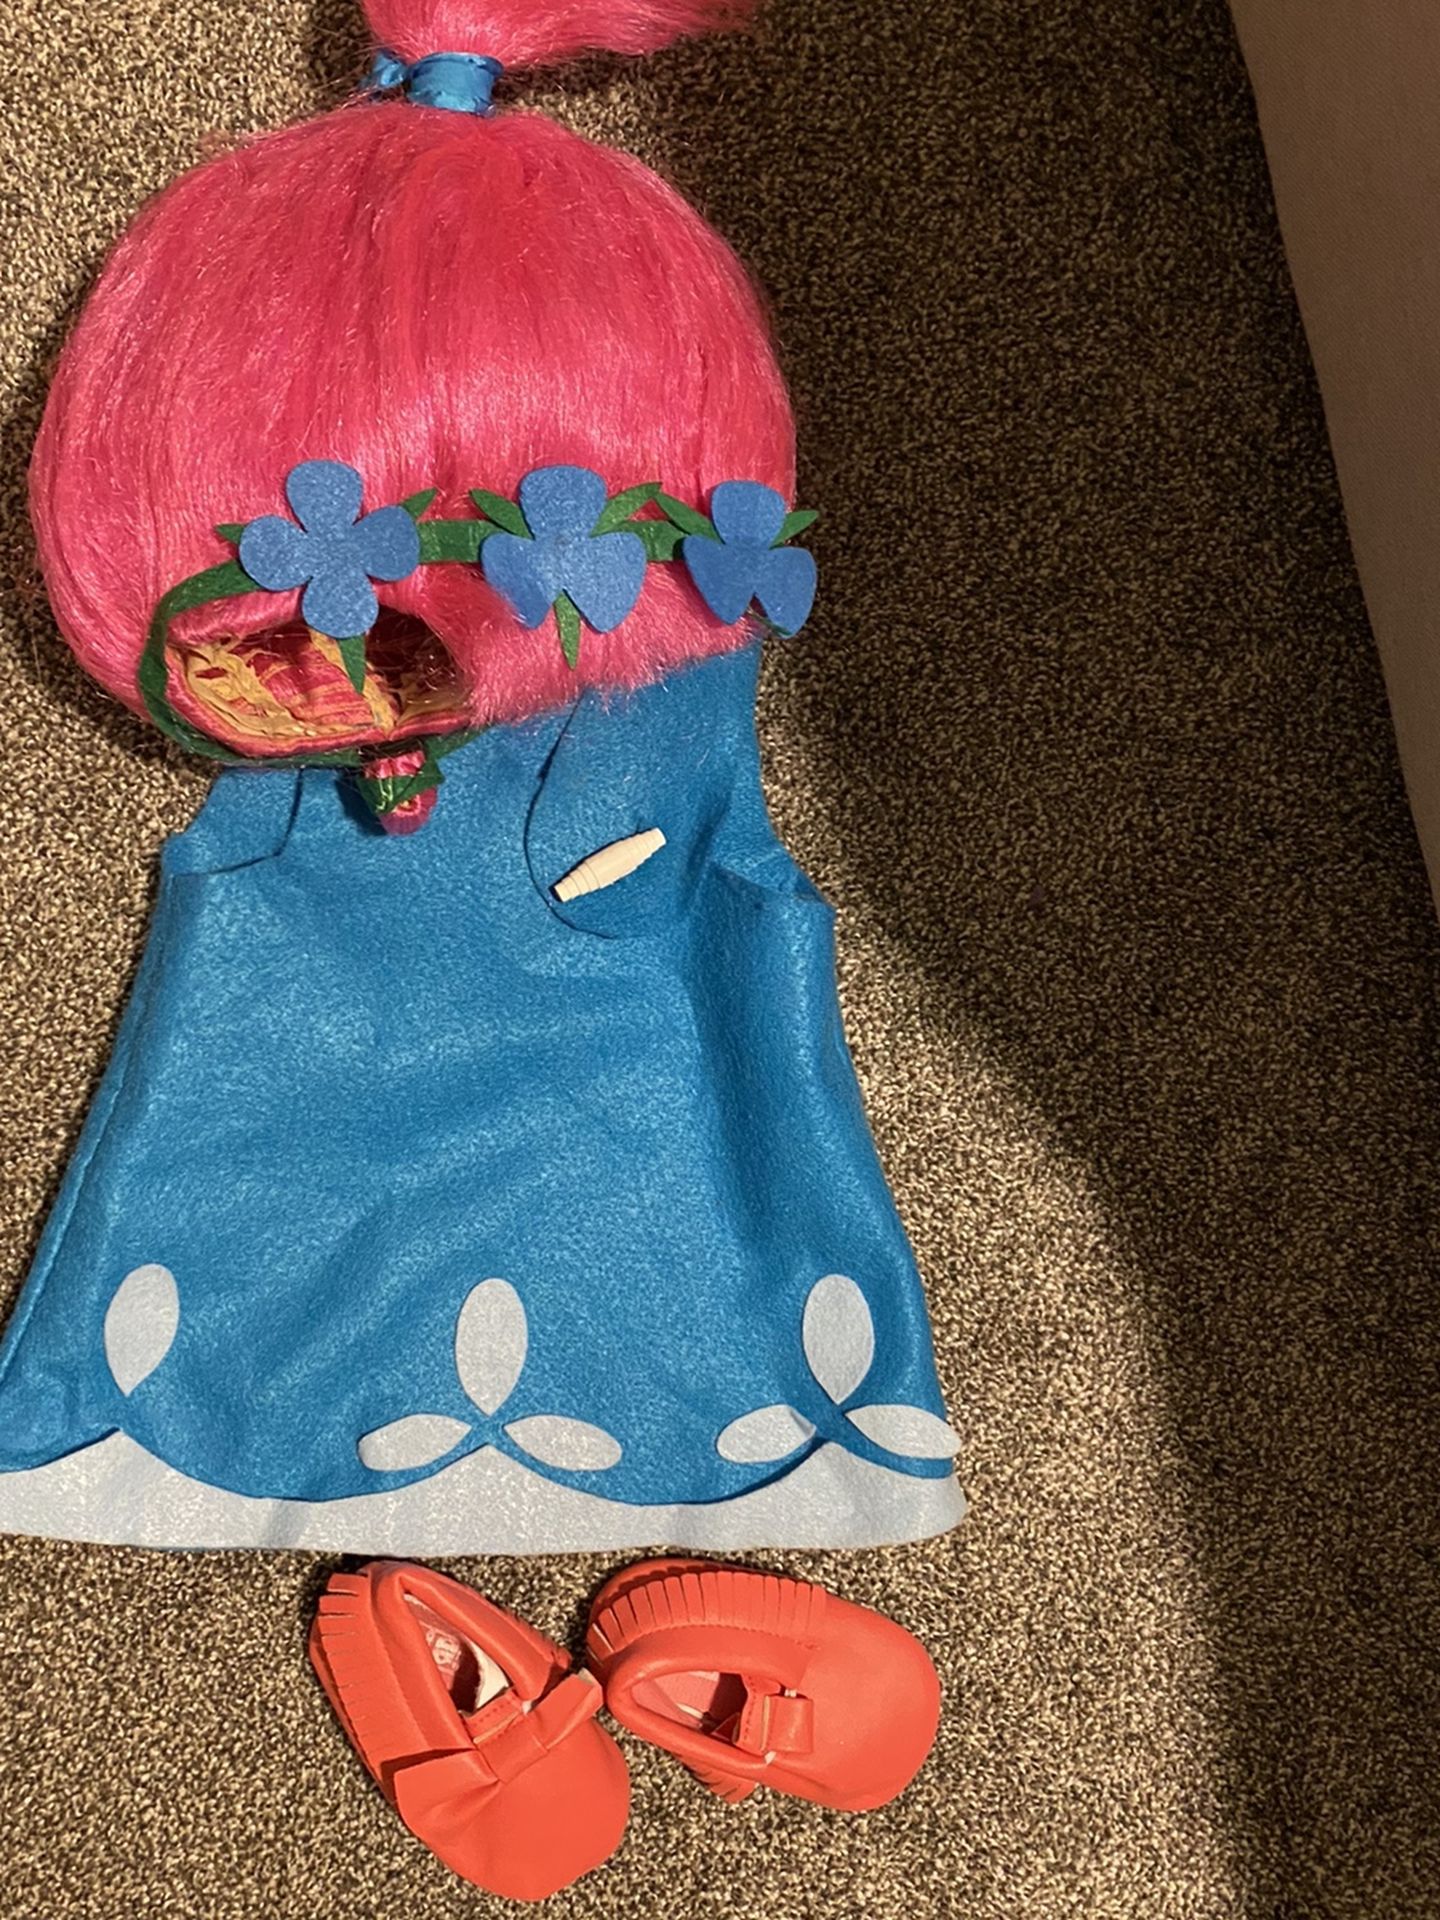 Trolls Poppy Costume - Size 1 Year Old